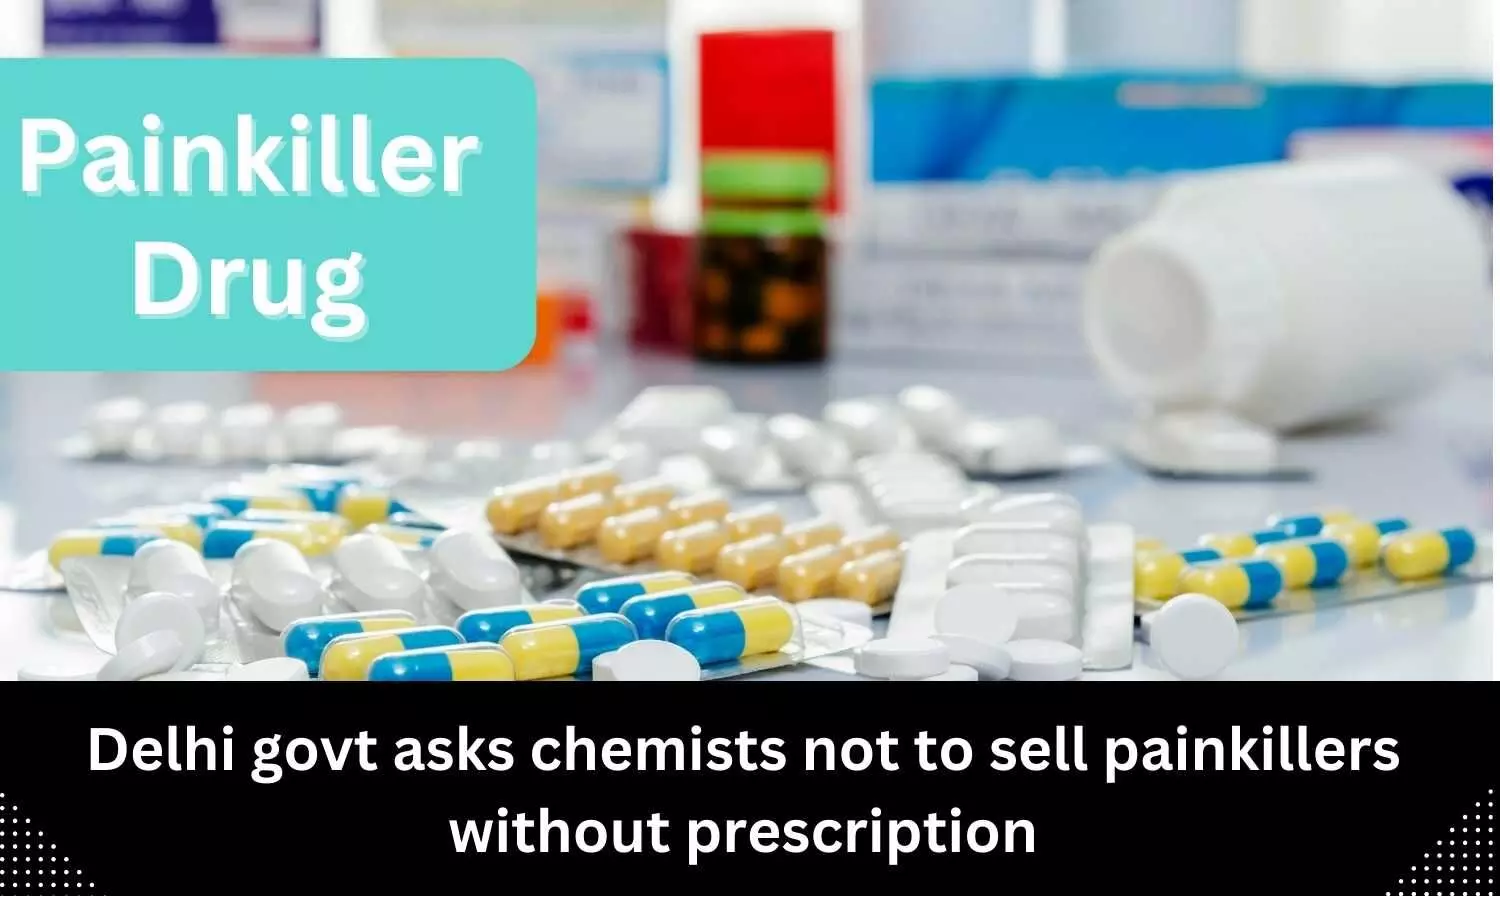 Do not sell painkillers without prescription: Delhi govt asks chemists